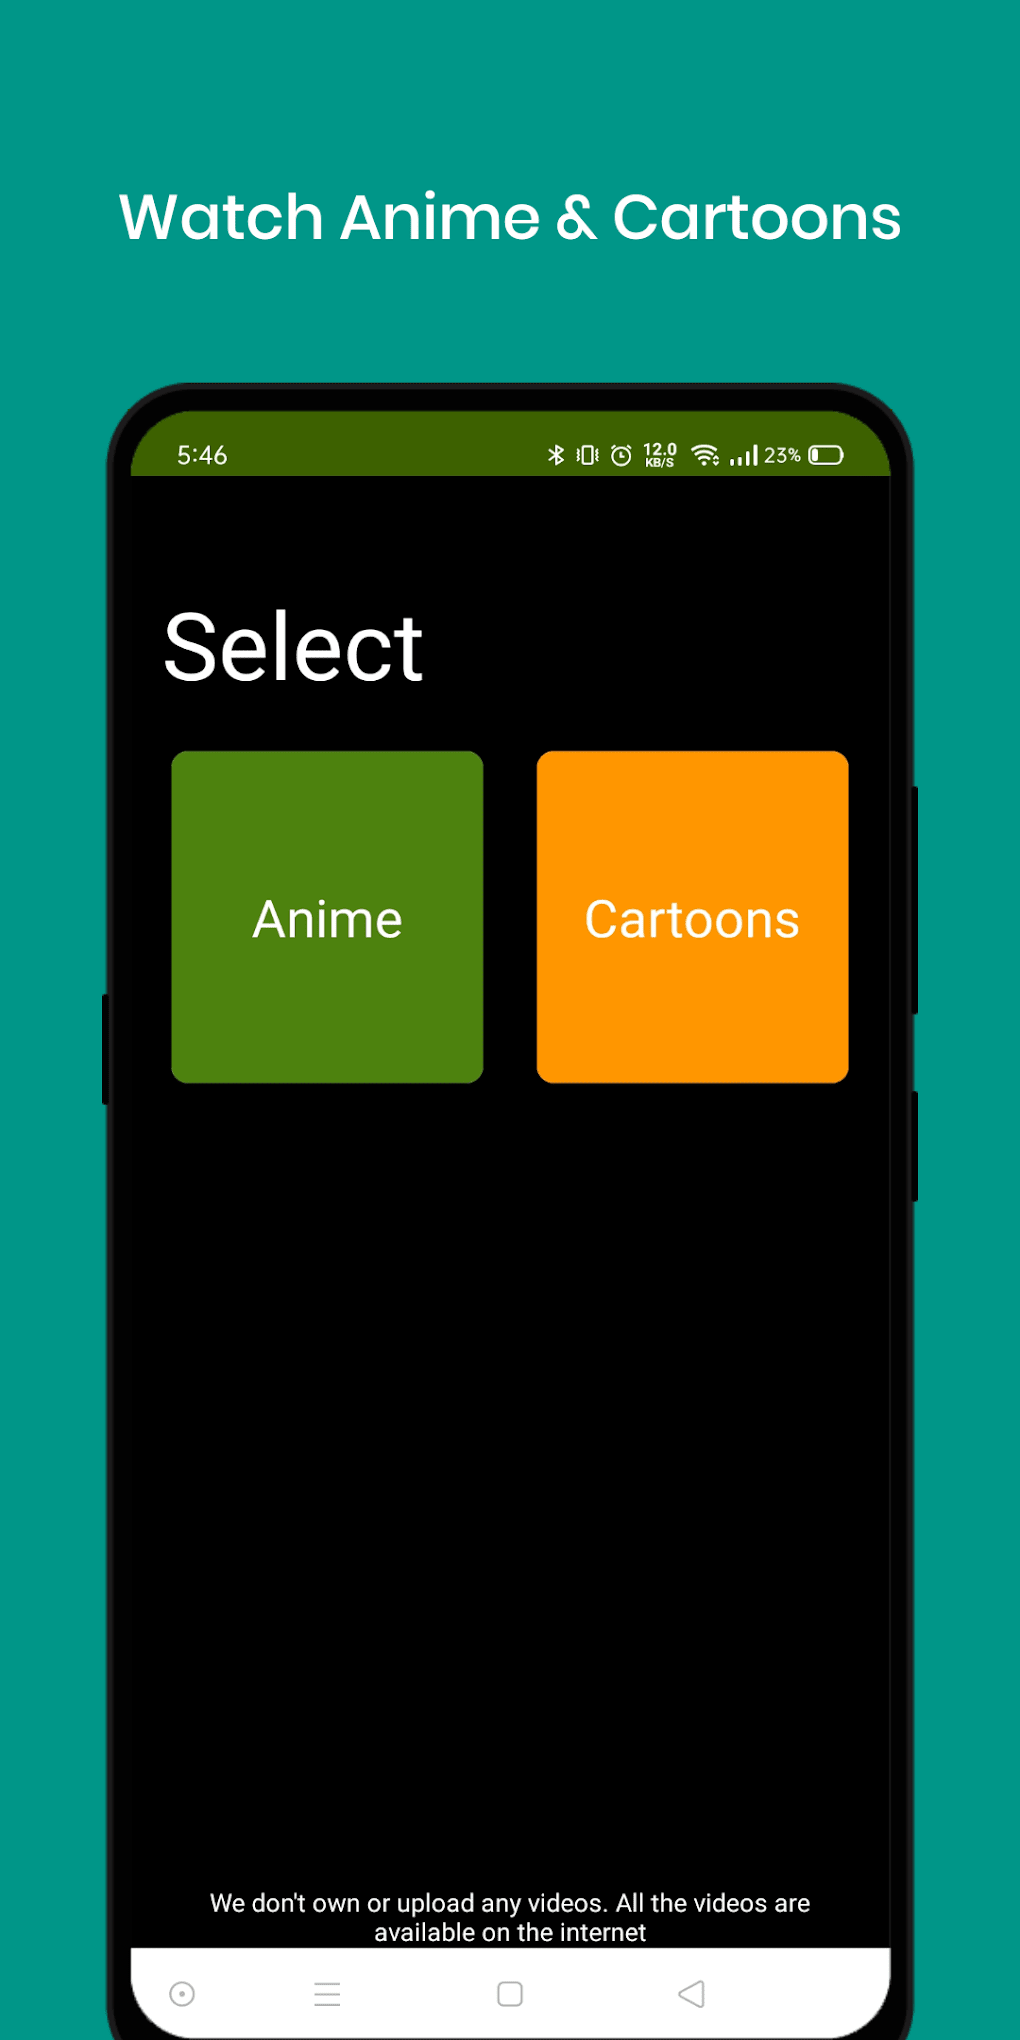 Anime TV Watch - KissAnime APK + Mod for Android.